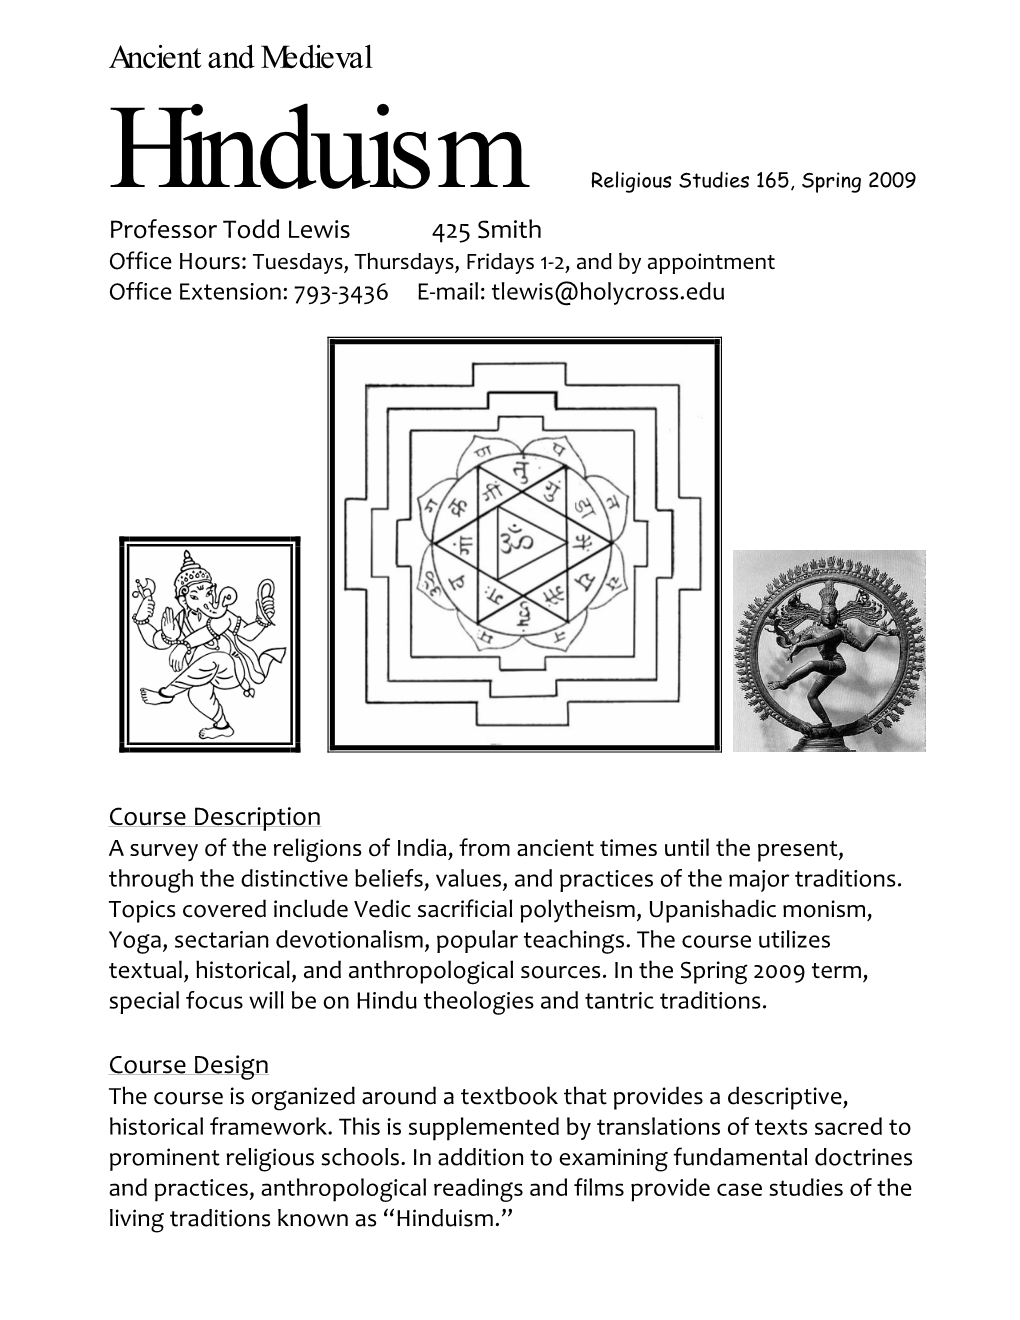 Ancient and Medieval Hinduism Syllabus, Page 2